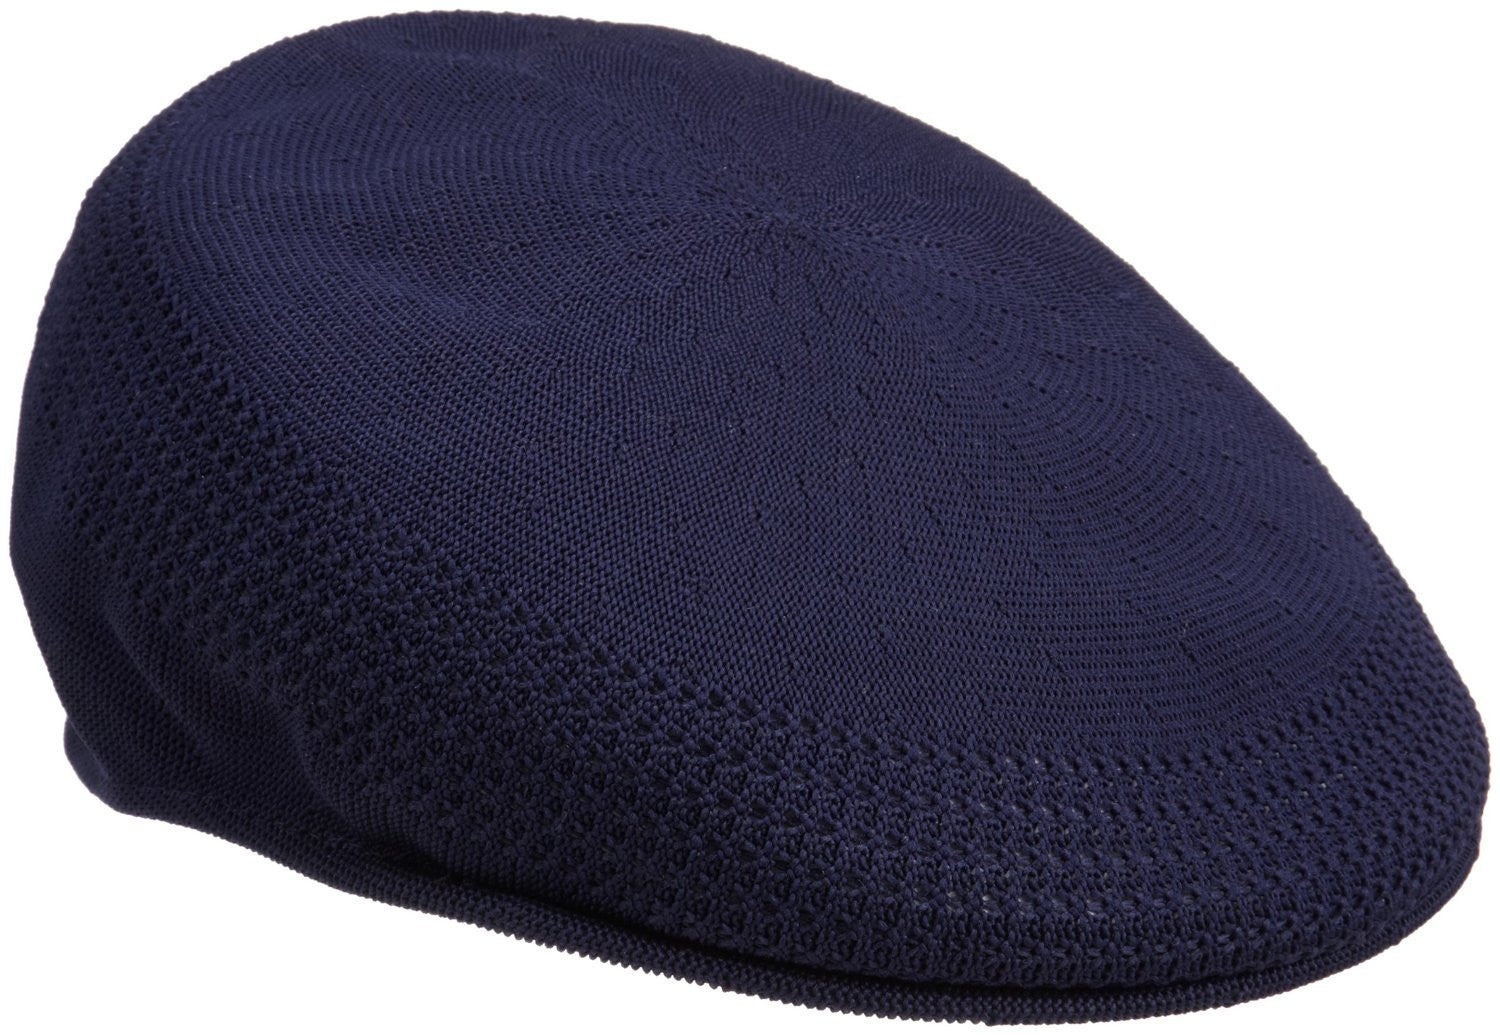 Kangol Hats: Ventair 504 CAP Navy – Army Navy Now